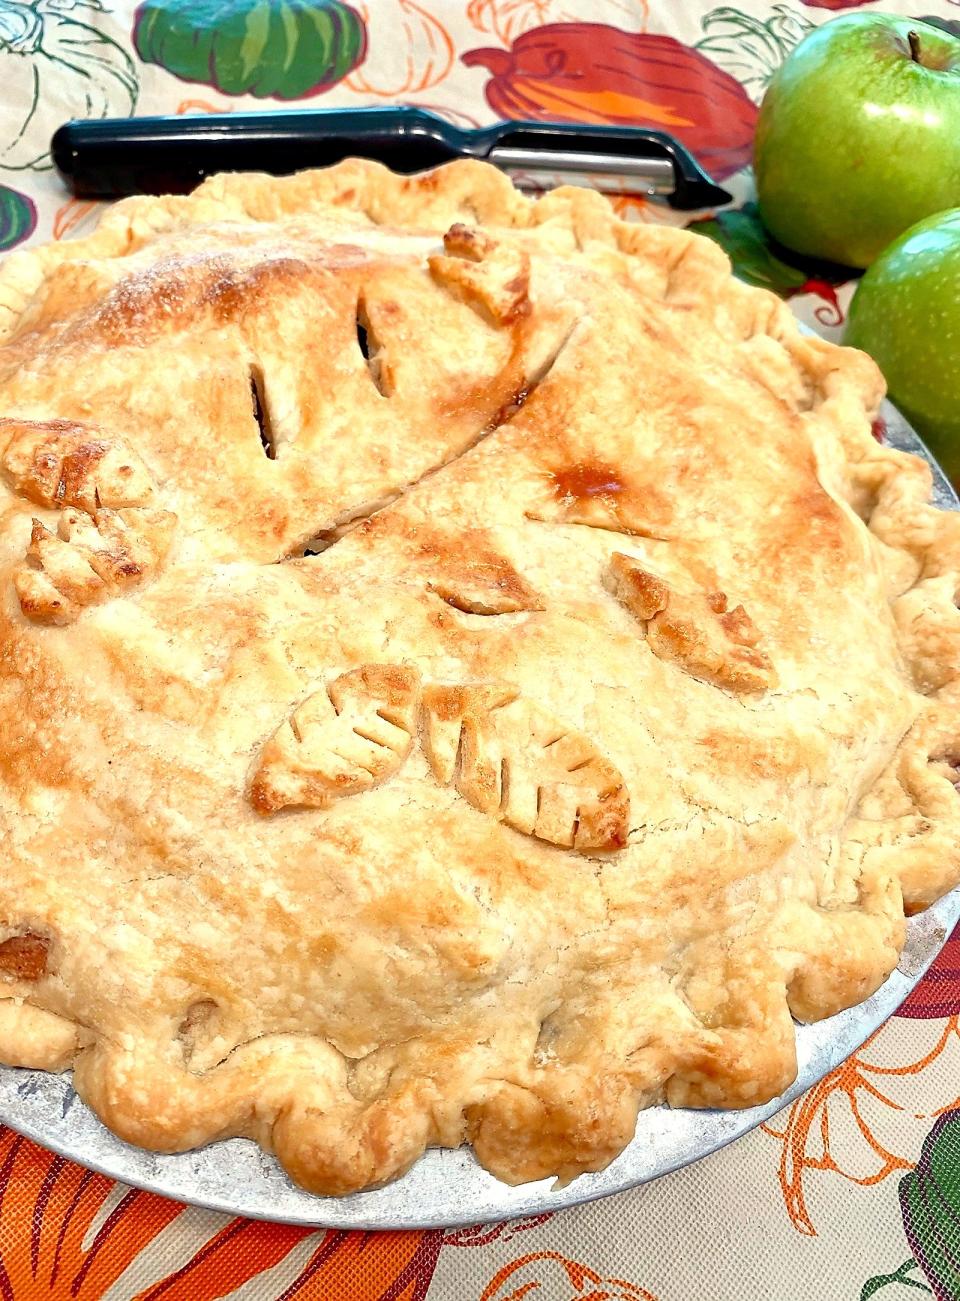 Oh-so-pleasing Wisconsin harvest pie